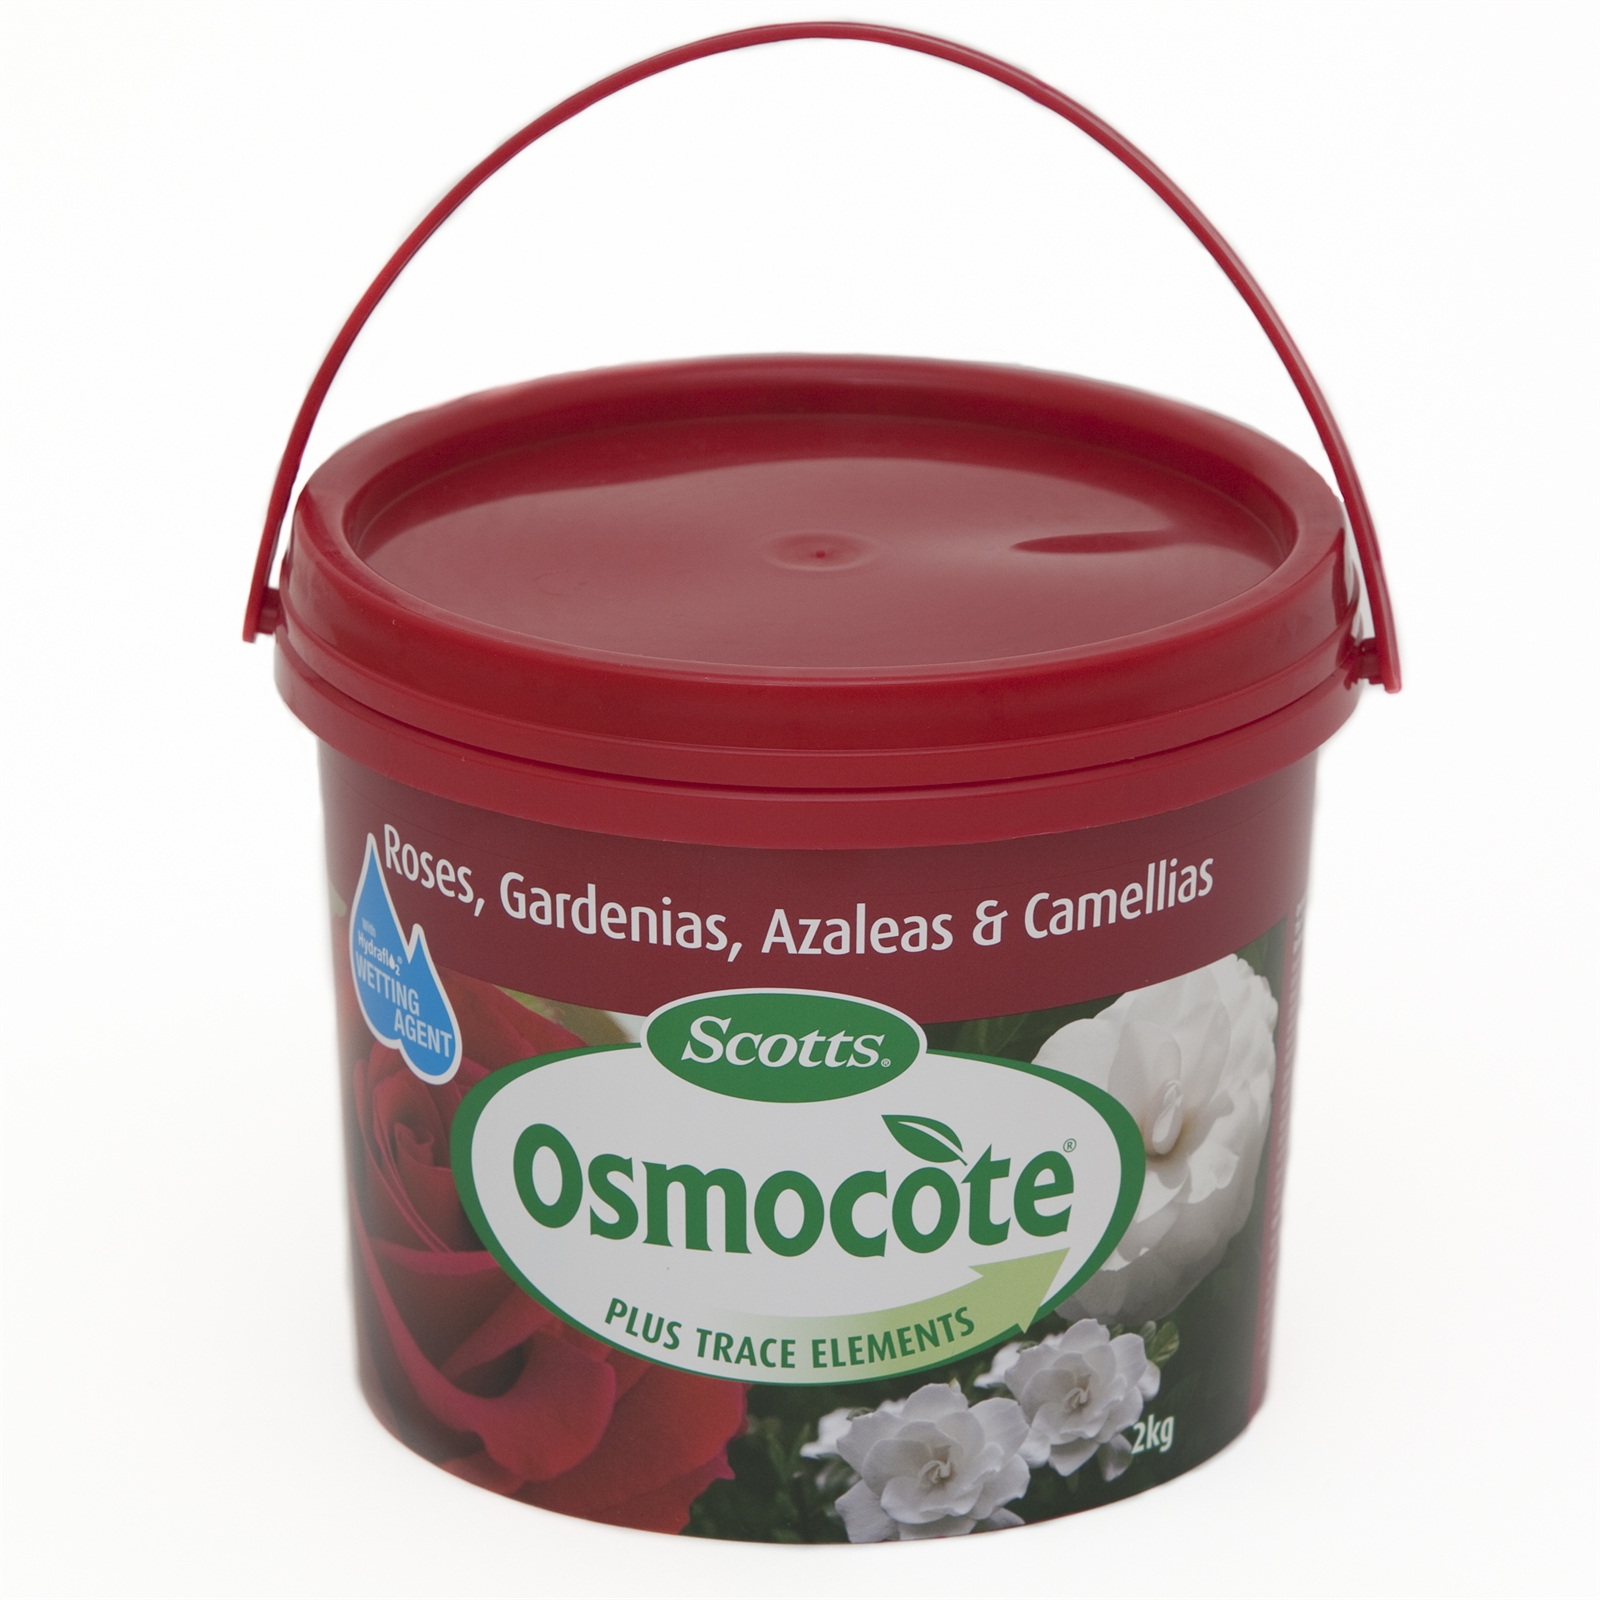 Osmocote 2kg Roses / Gardenias / Azaleas / Camellias Controlled Release Fertiliser